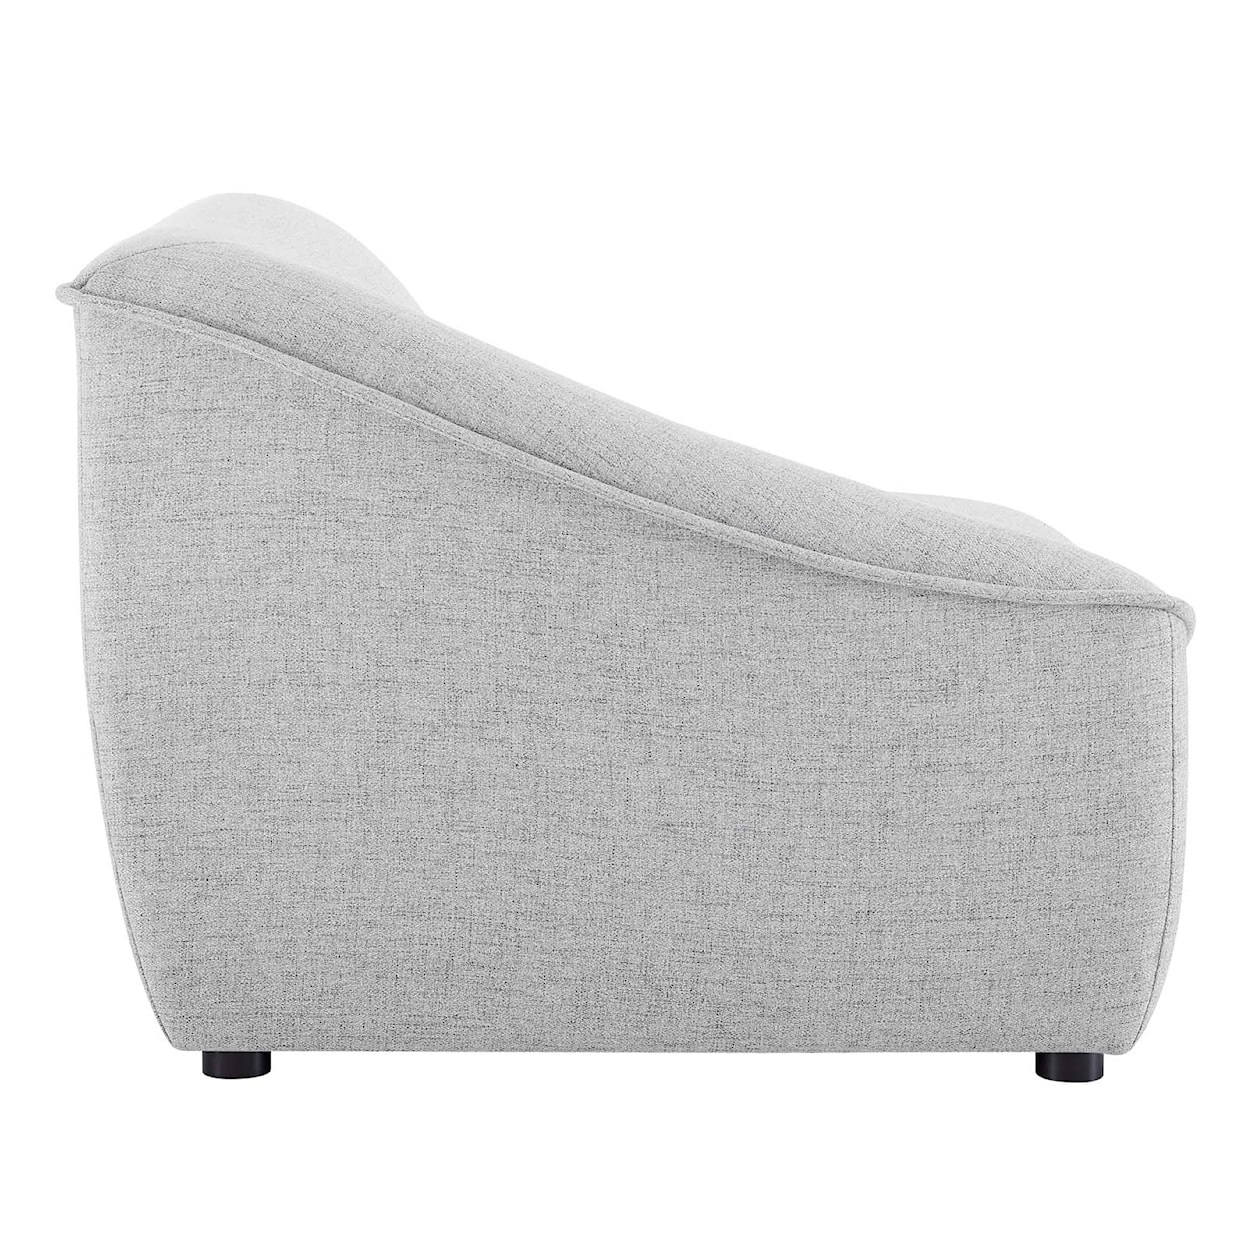 Modway Comprise 8-Piece Sectional Sofa